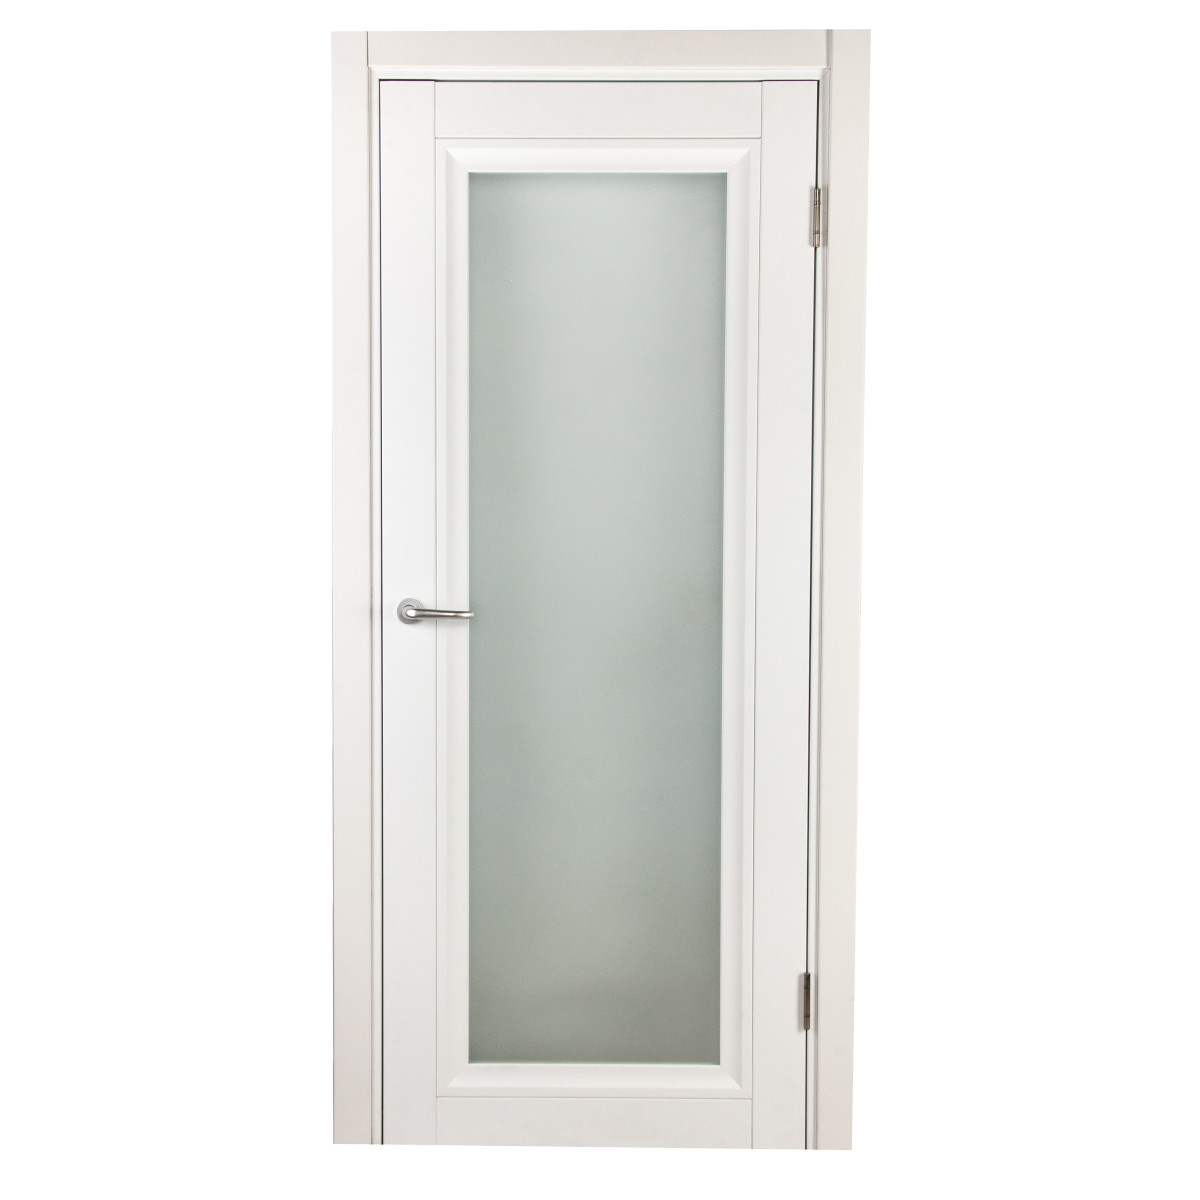 Дверь межкомнатная Нобиле 80х200 см, цвет белый, с замком